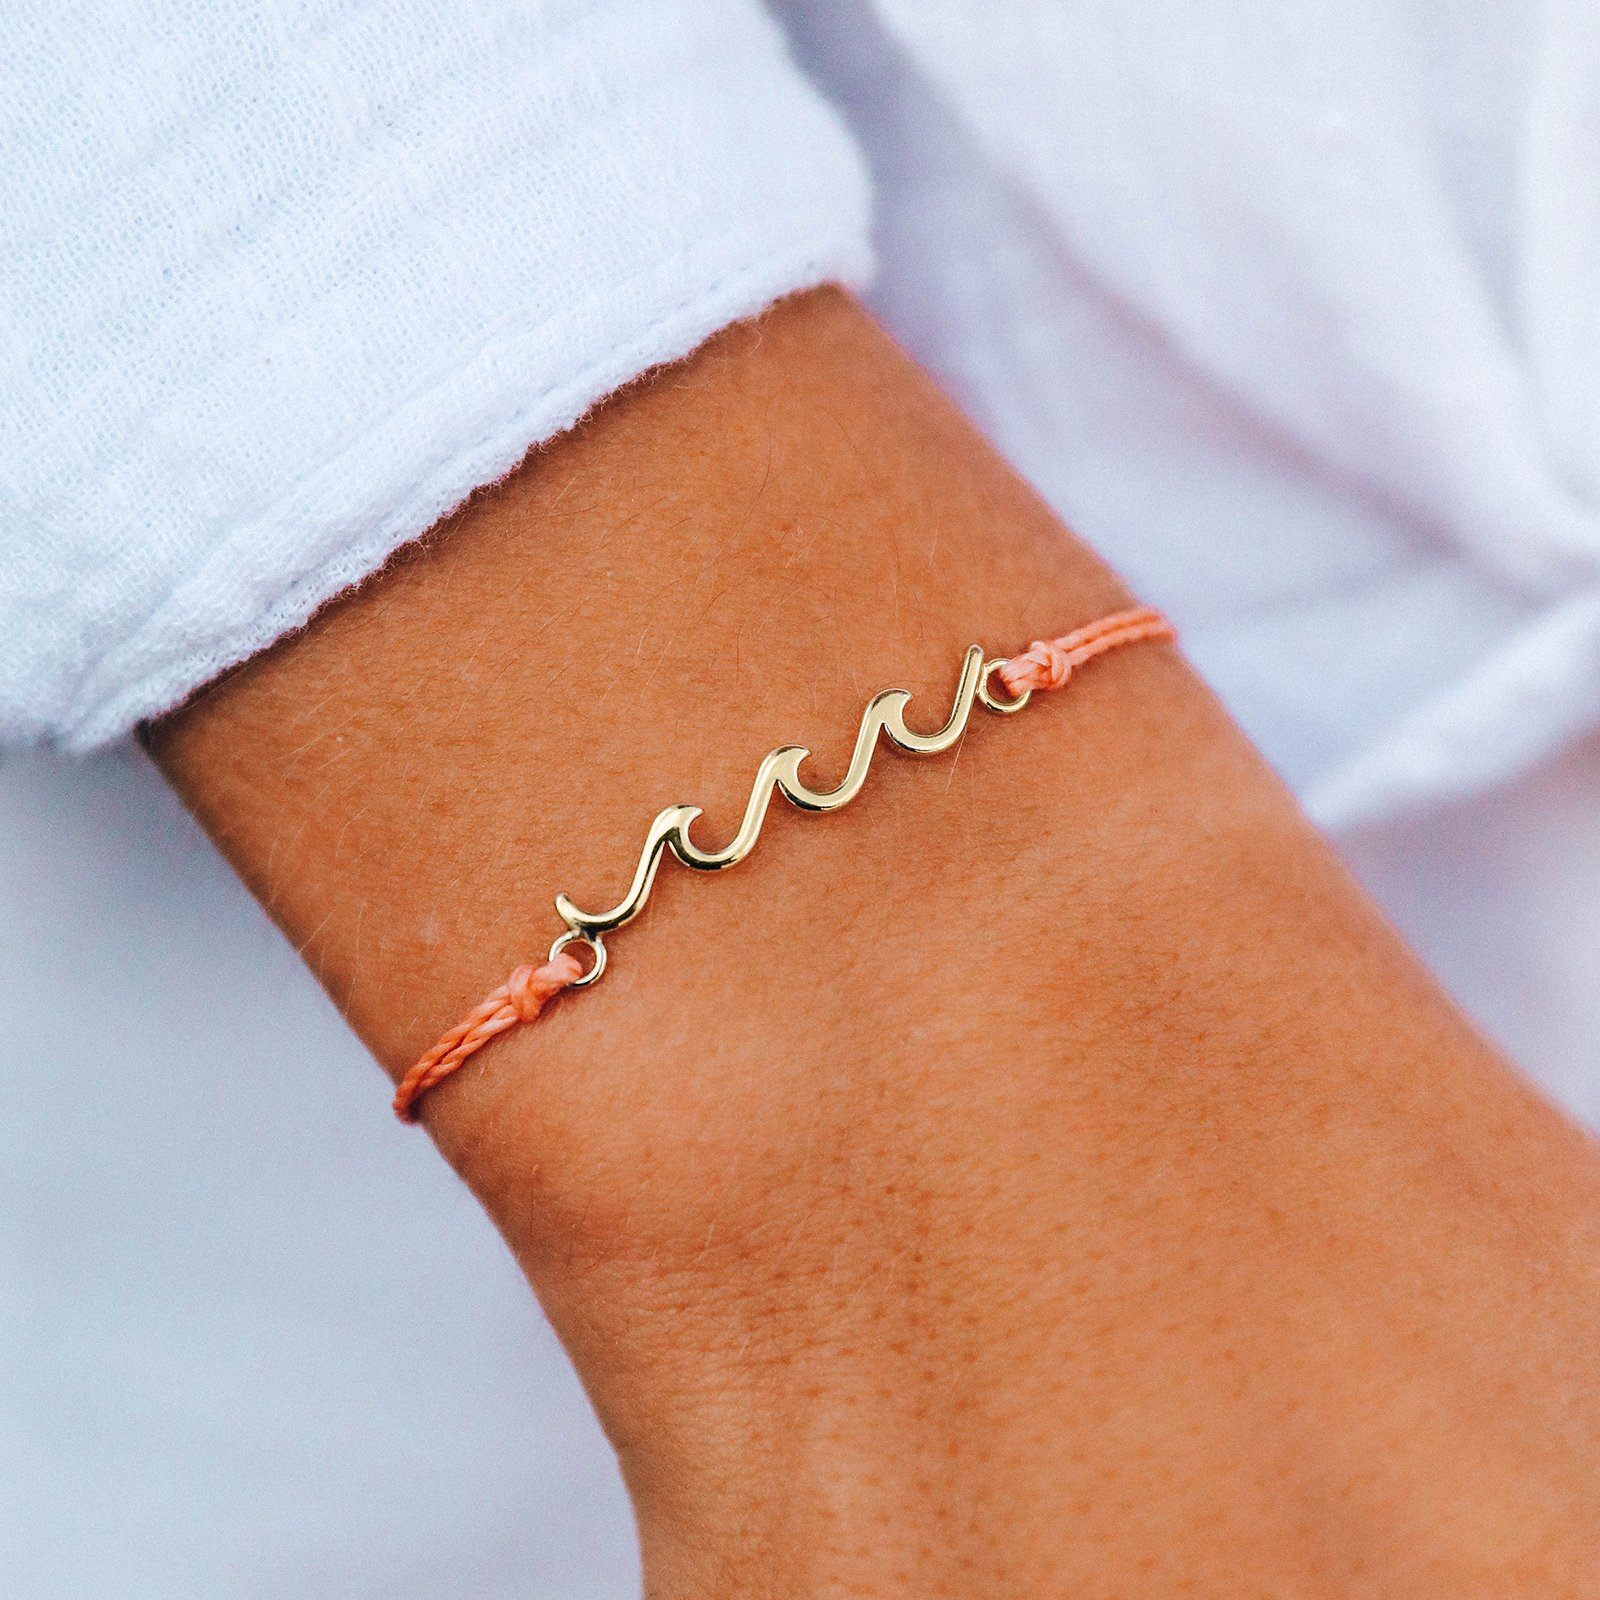 Delicate Pearl Bracelets | Mangatrai Pearls & Jewellers